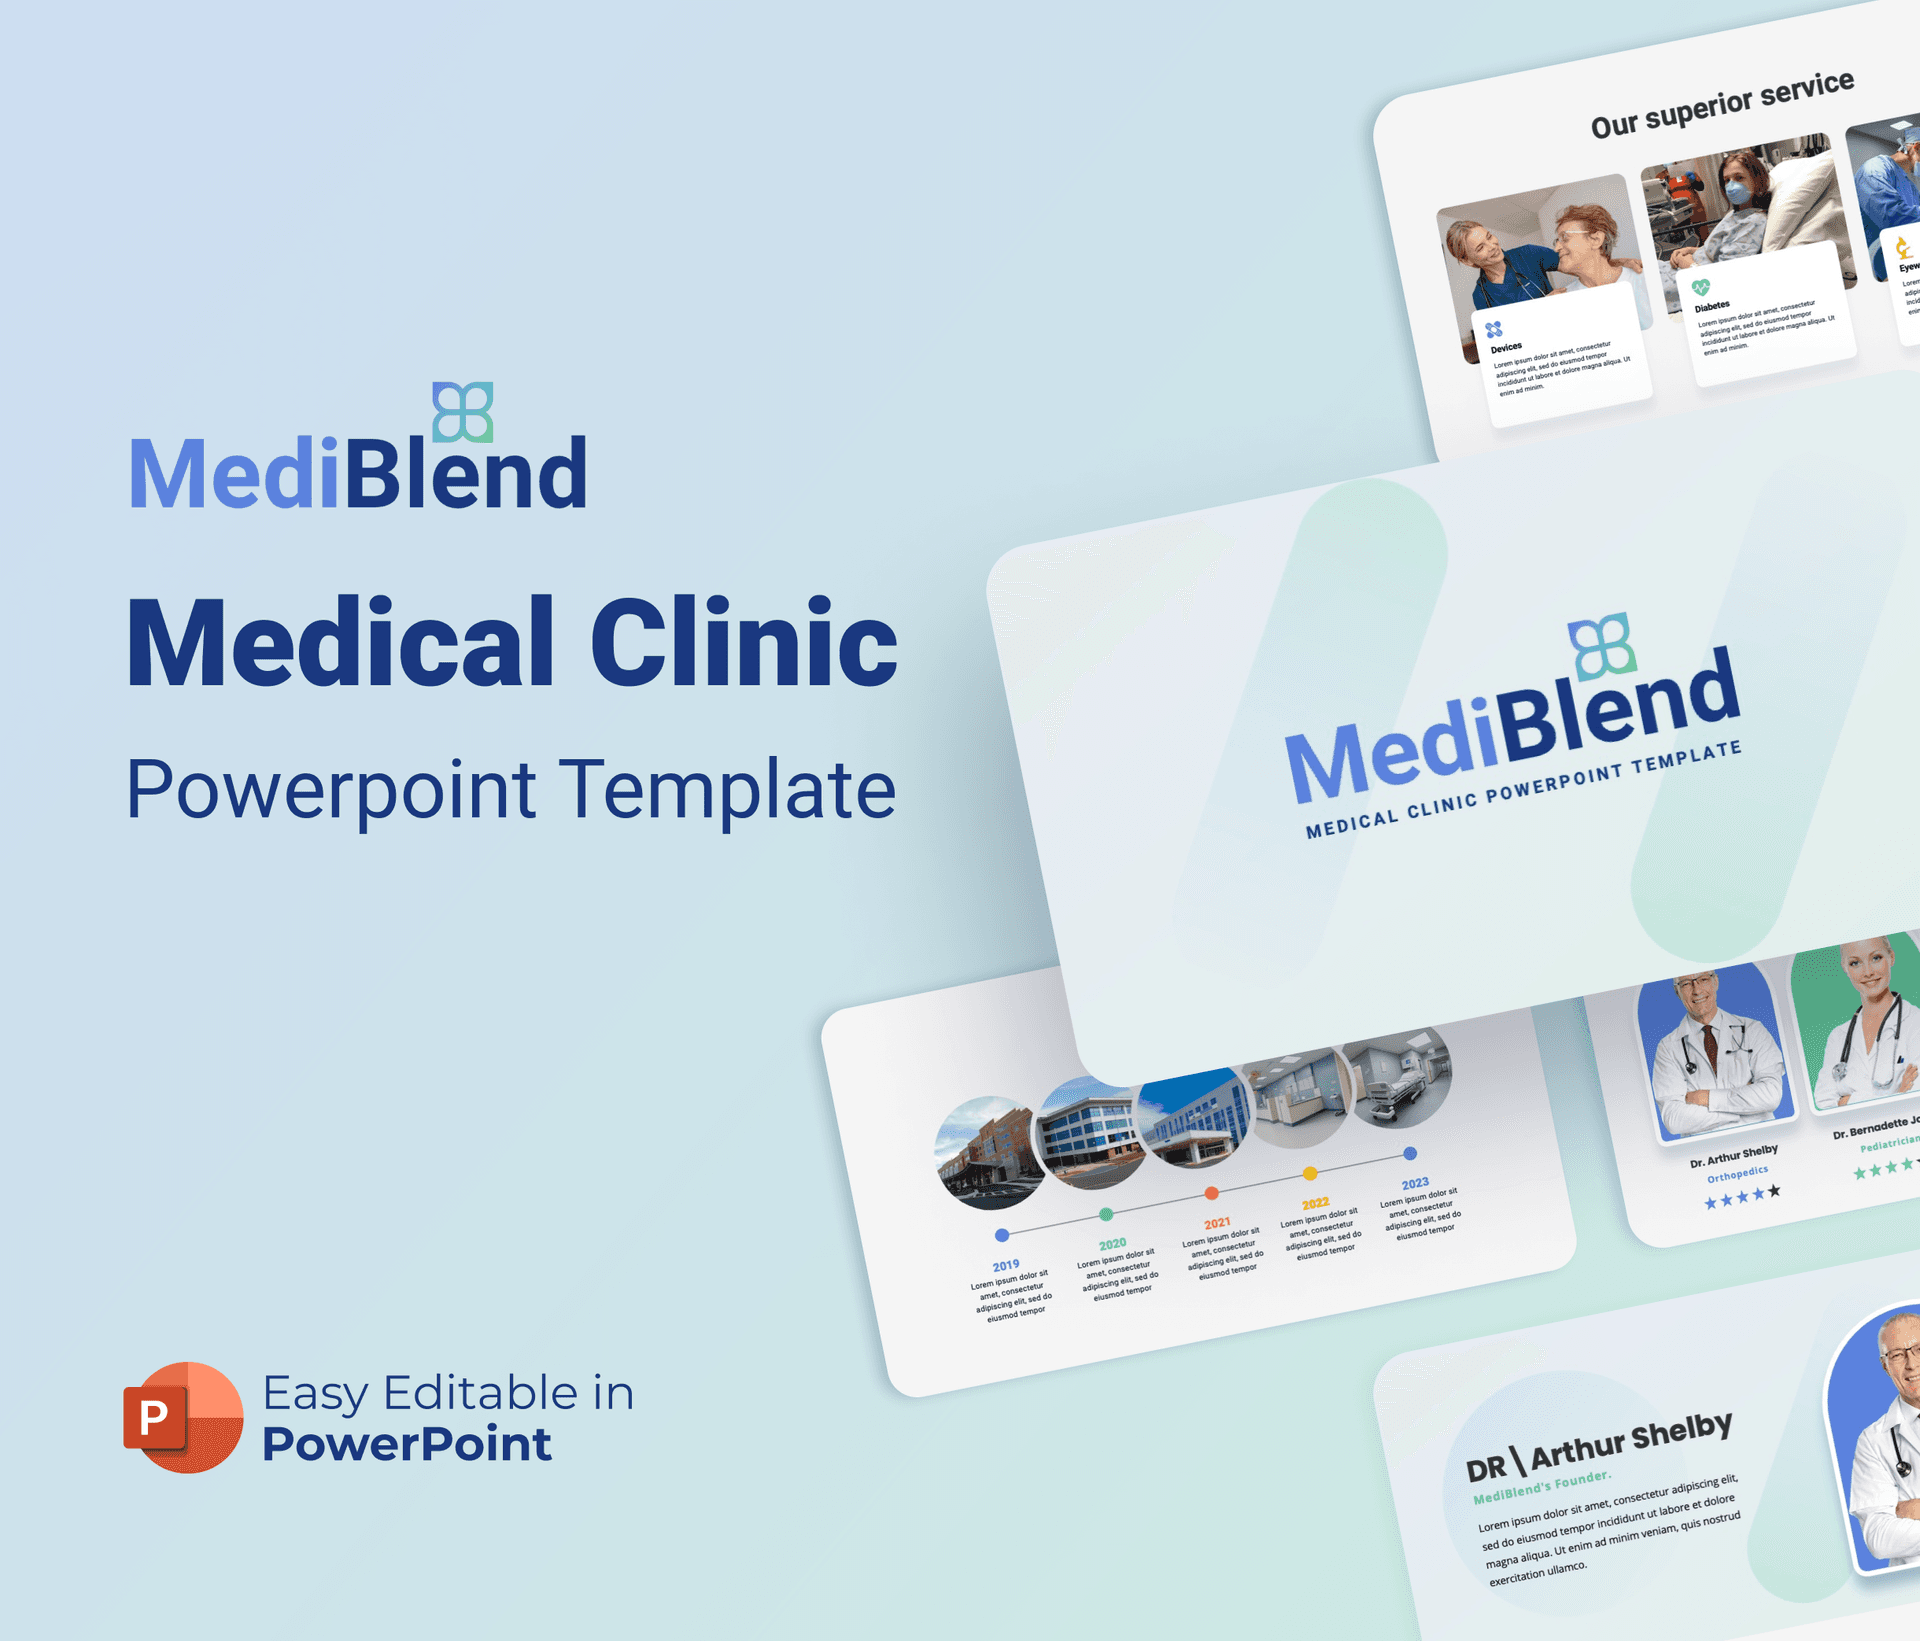 MediBlend - Medical Clinic PowerPoint Template